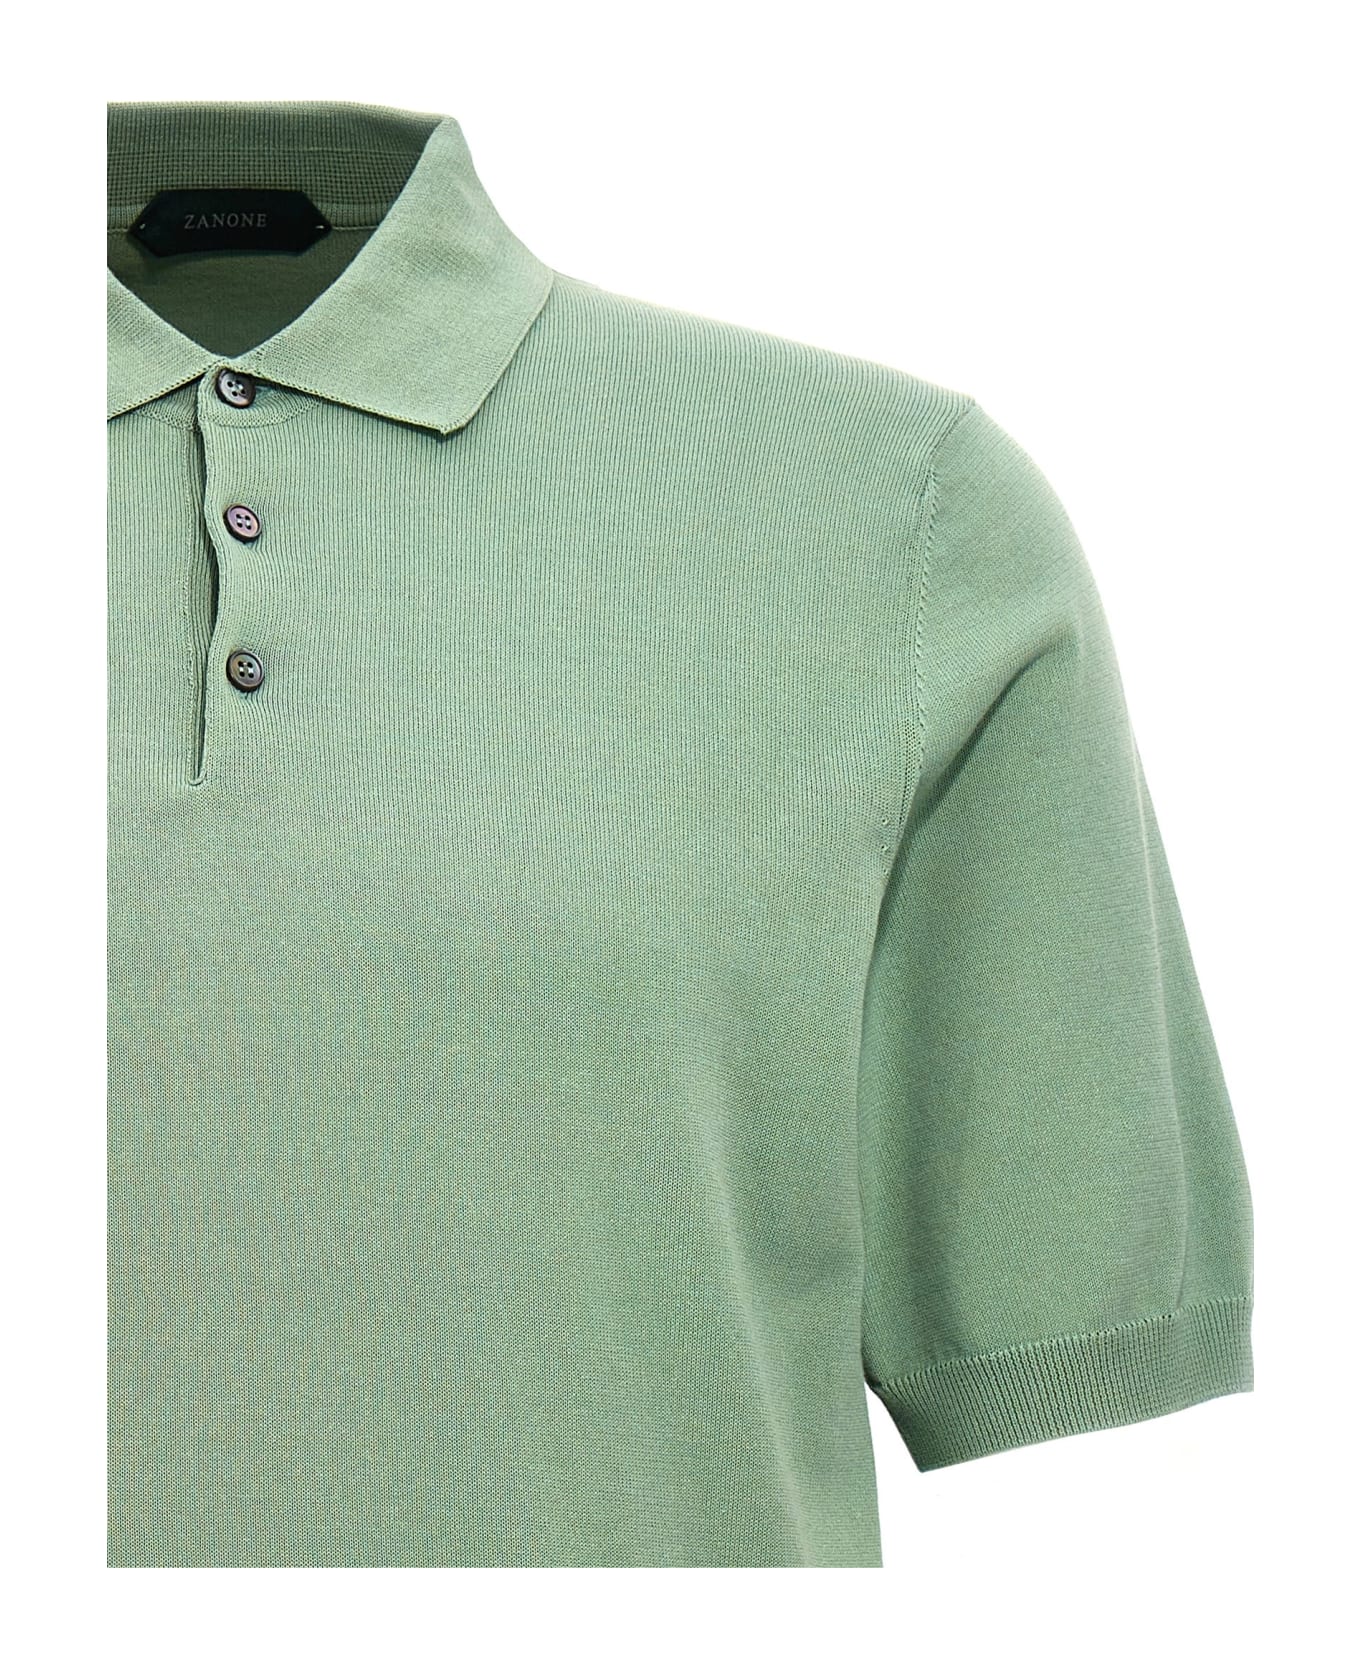 Zanone Cotton Polo Shirt - Green